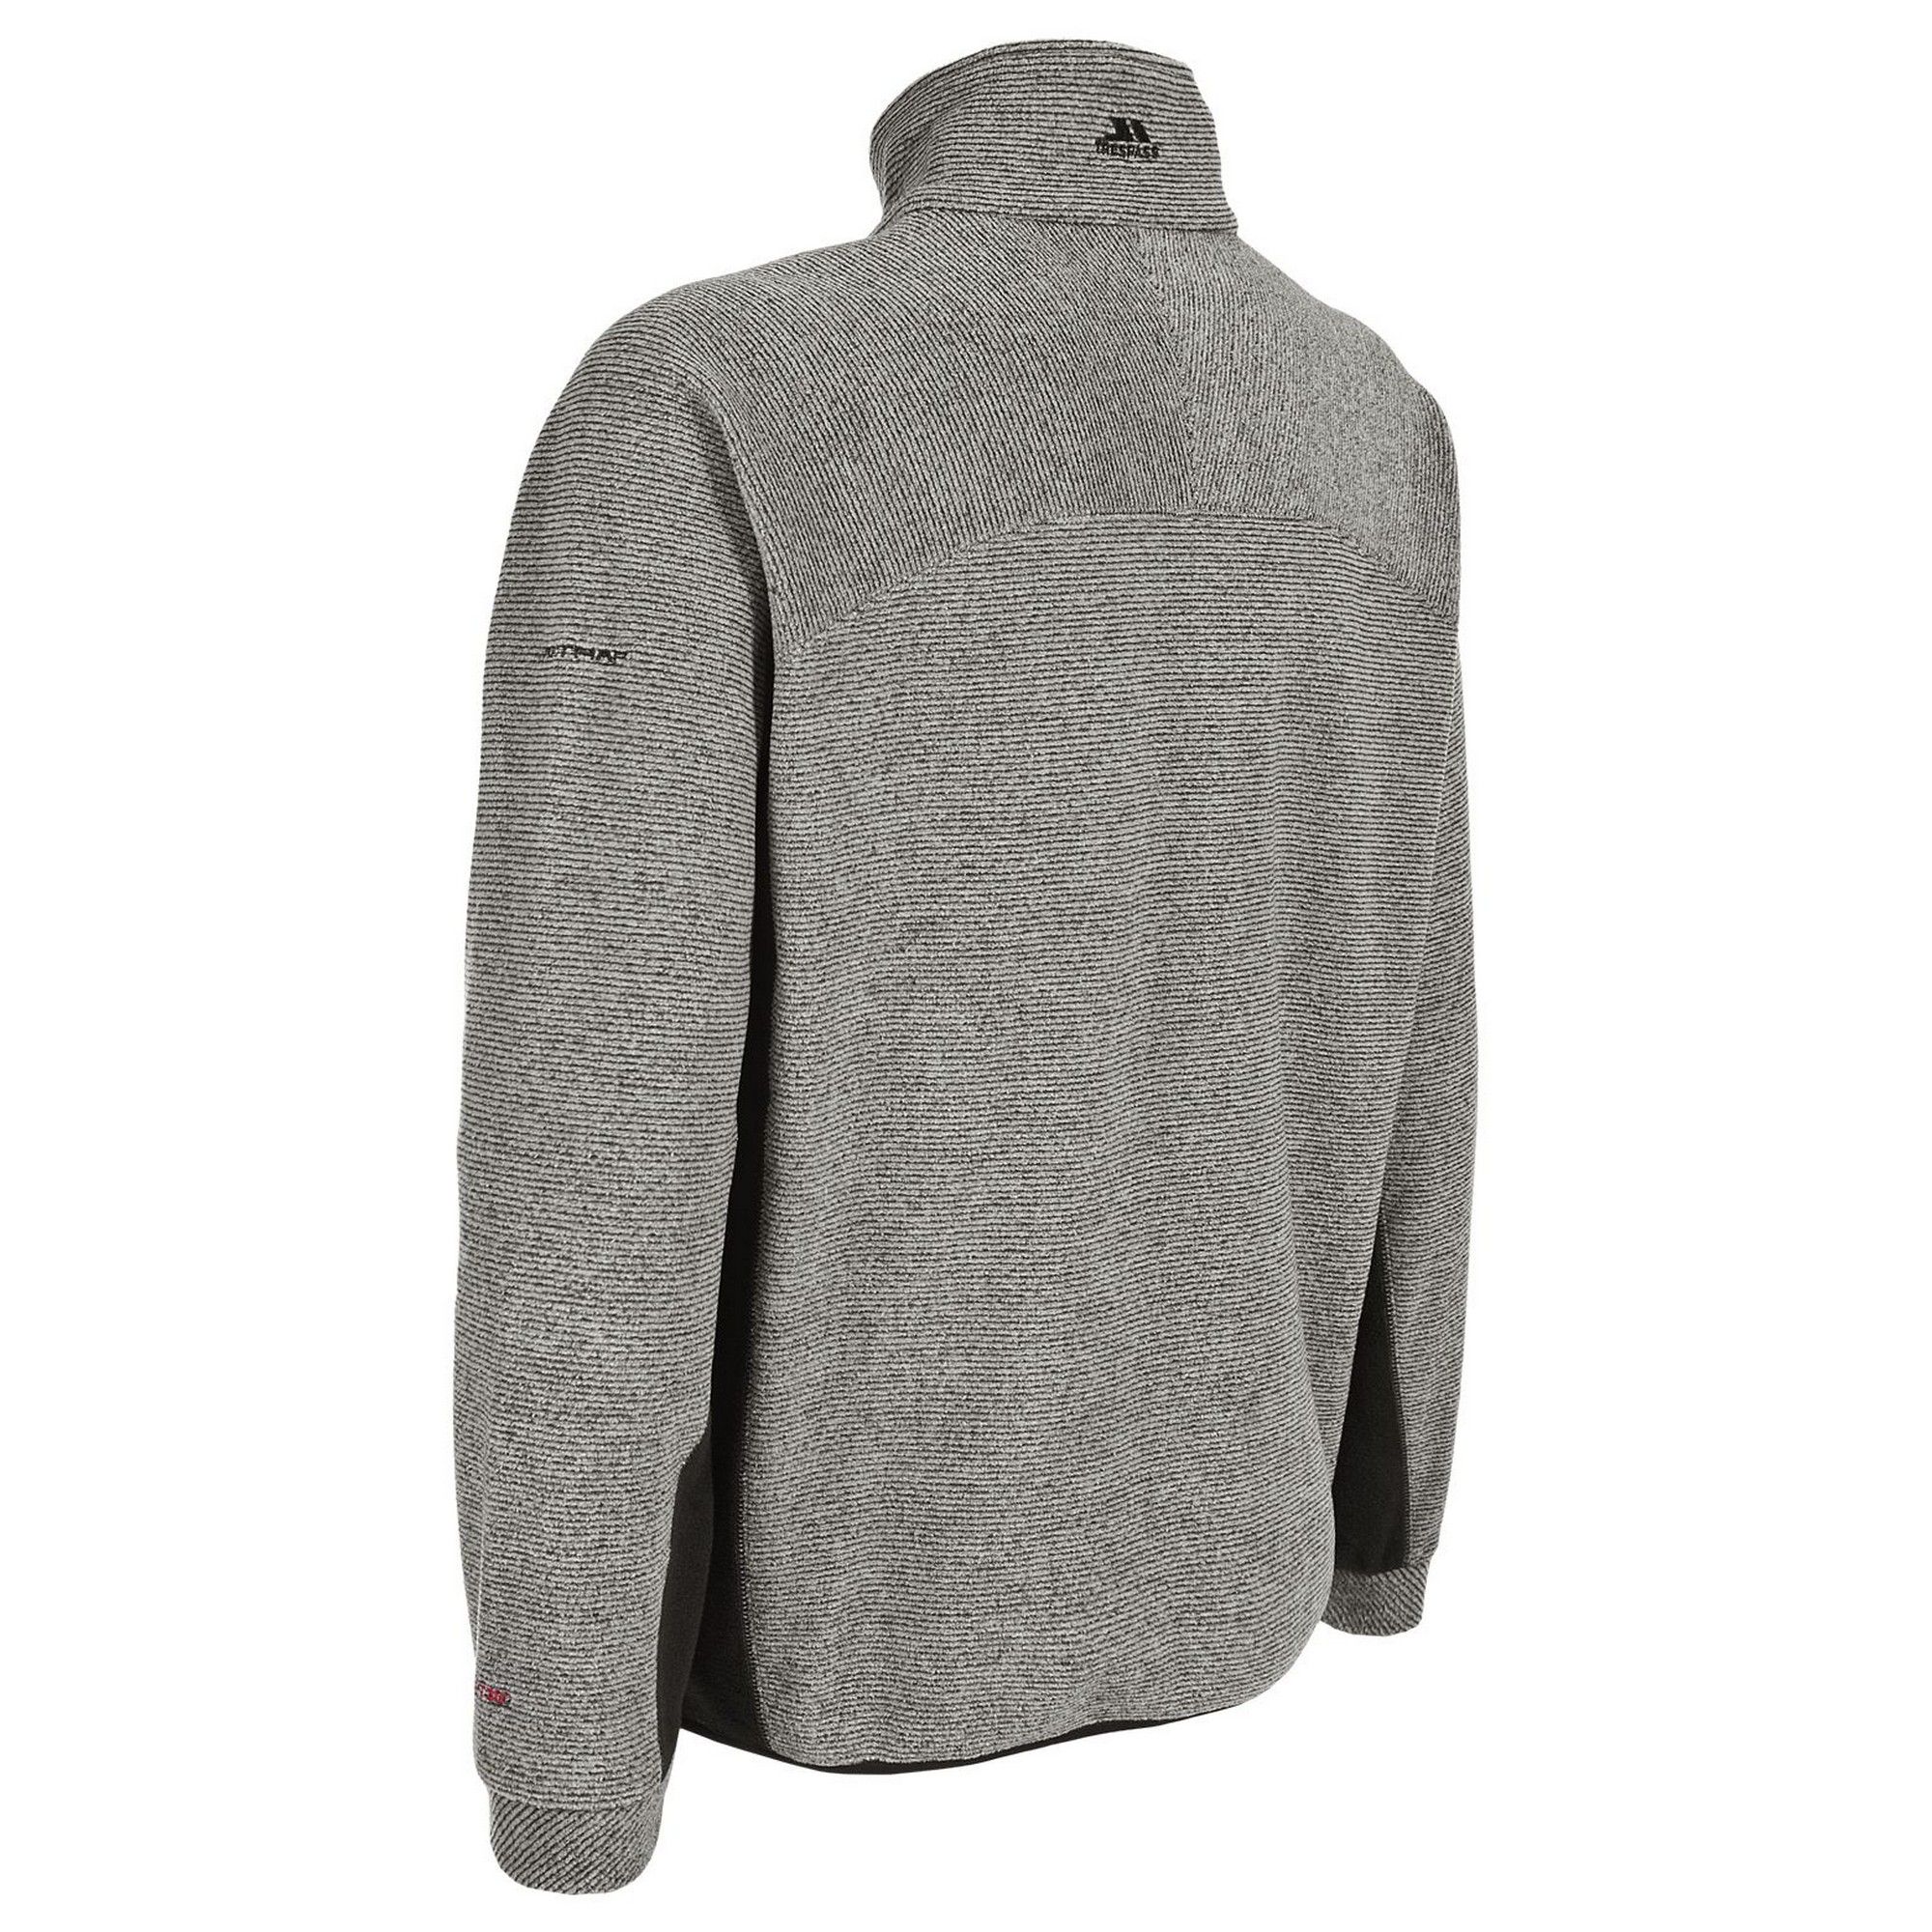 Mens fleece jacket. 320gsm Airtrap fleece to trap and hold onto body heat. Rib effect fleece. Full front zip. 3 zip pockets. Black polar fleece side panels. 84% Polyester, 16% Viscose.